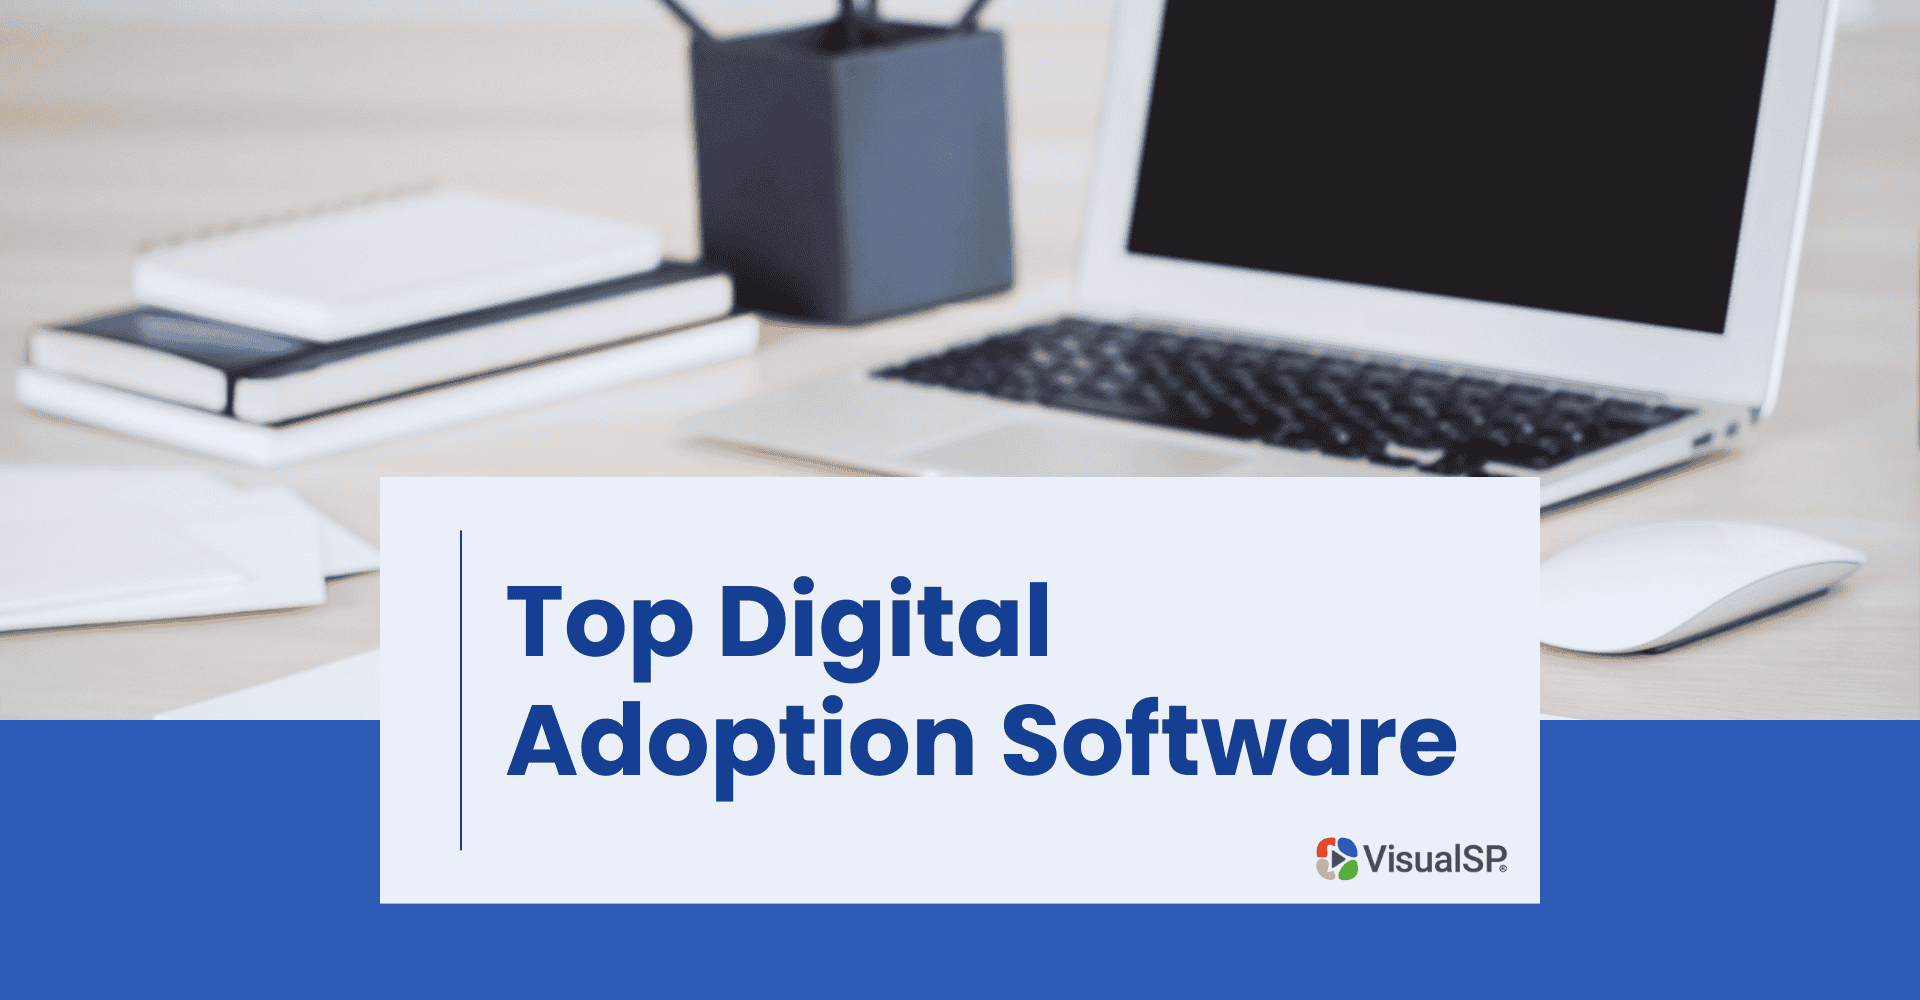 Top Digital Adoption Software